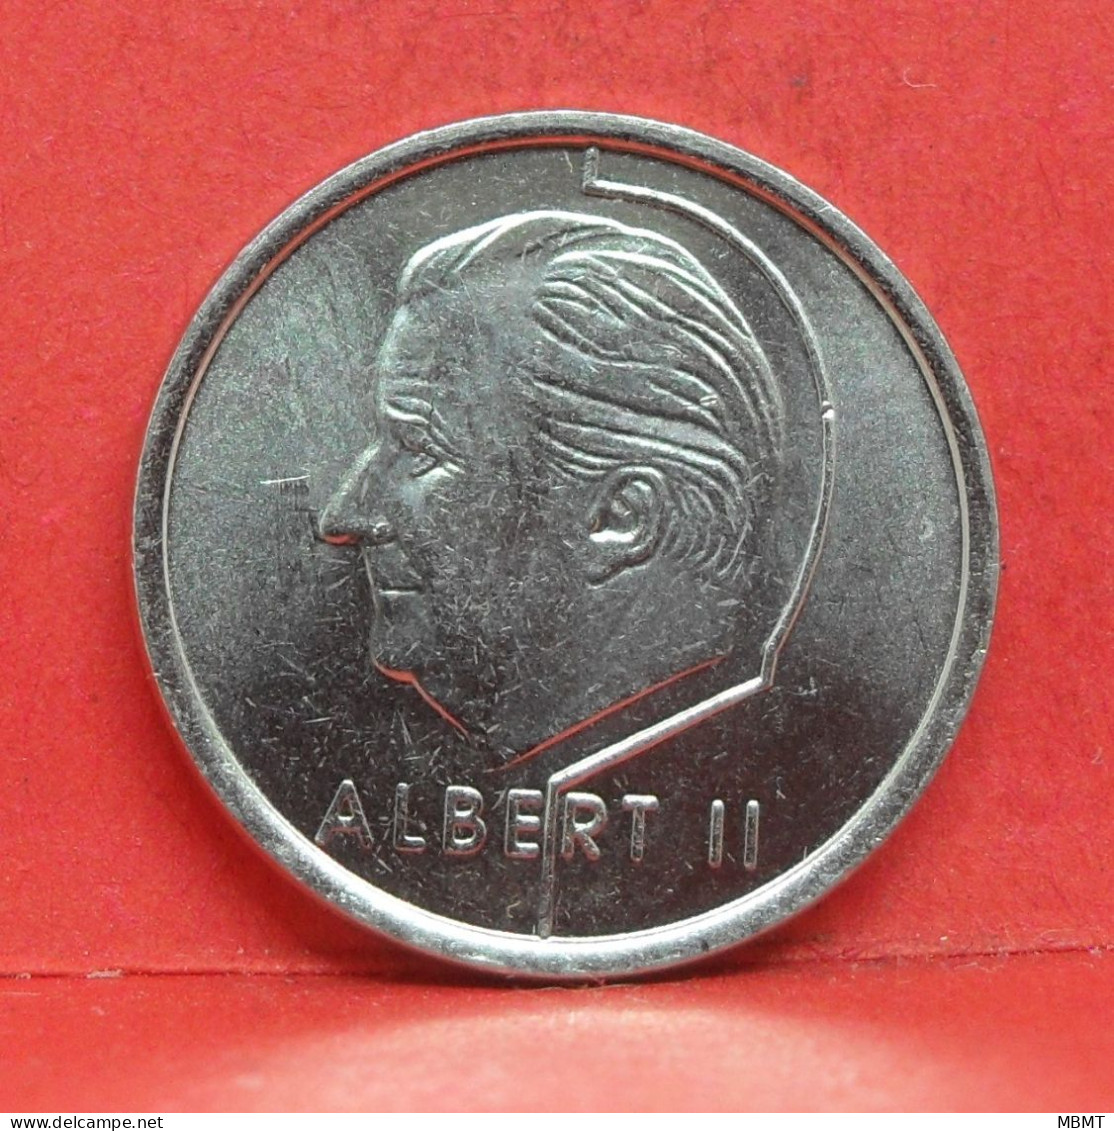 1 Frank 1997 - SUP - Pièce Monnaie Belgie - Article N°1972 - 1 Franc